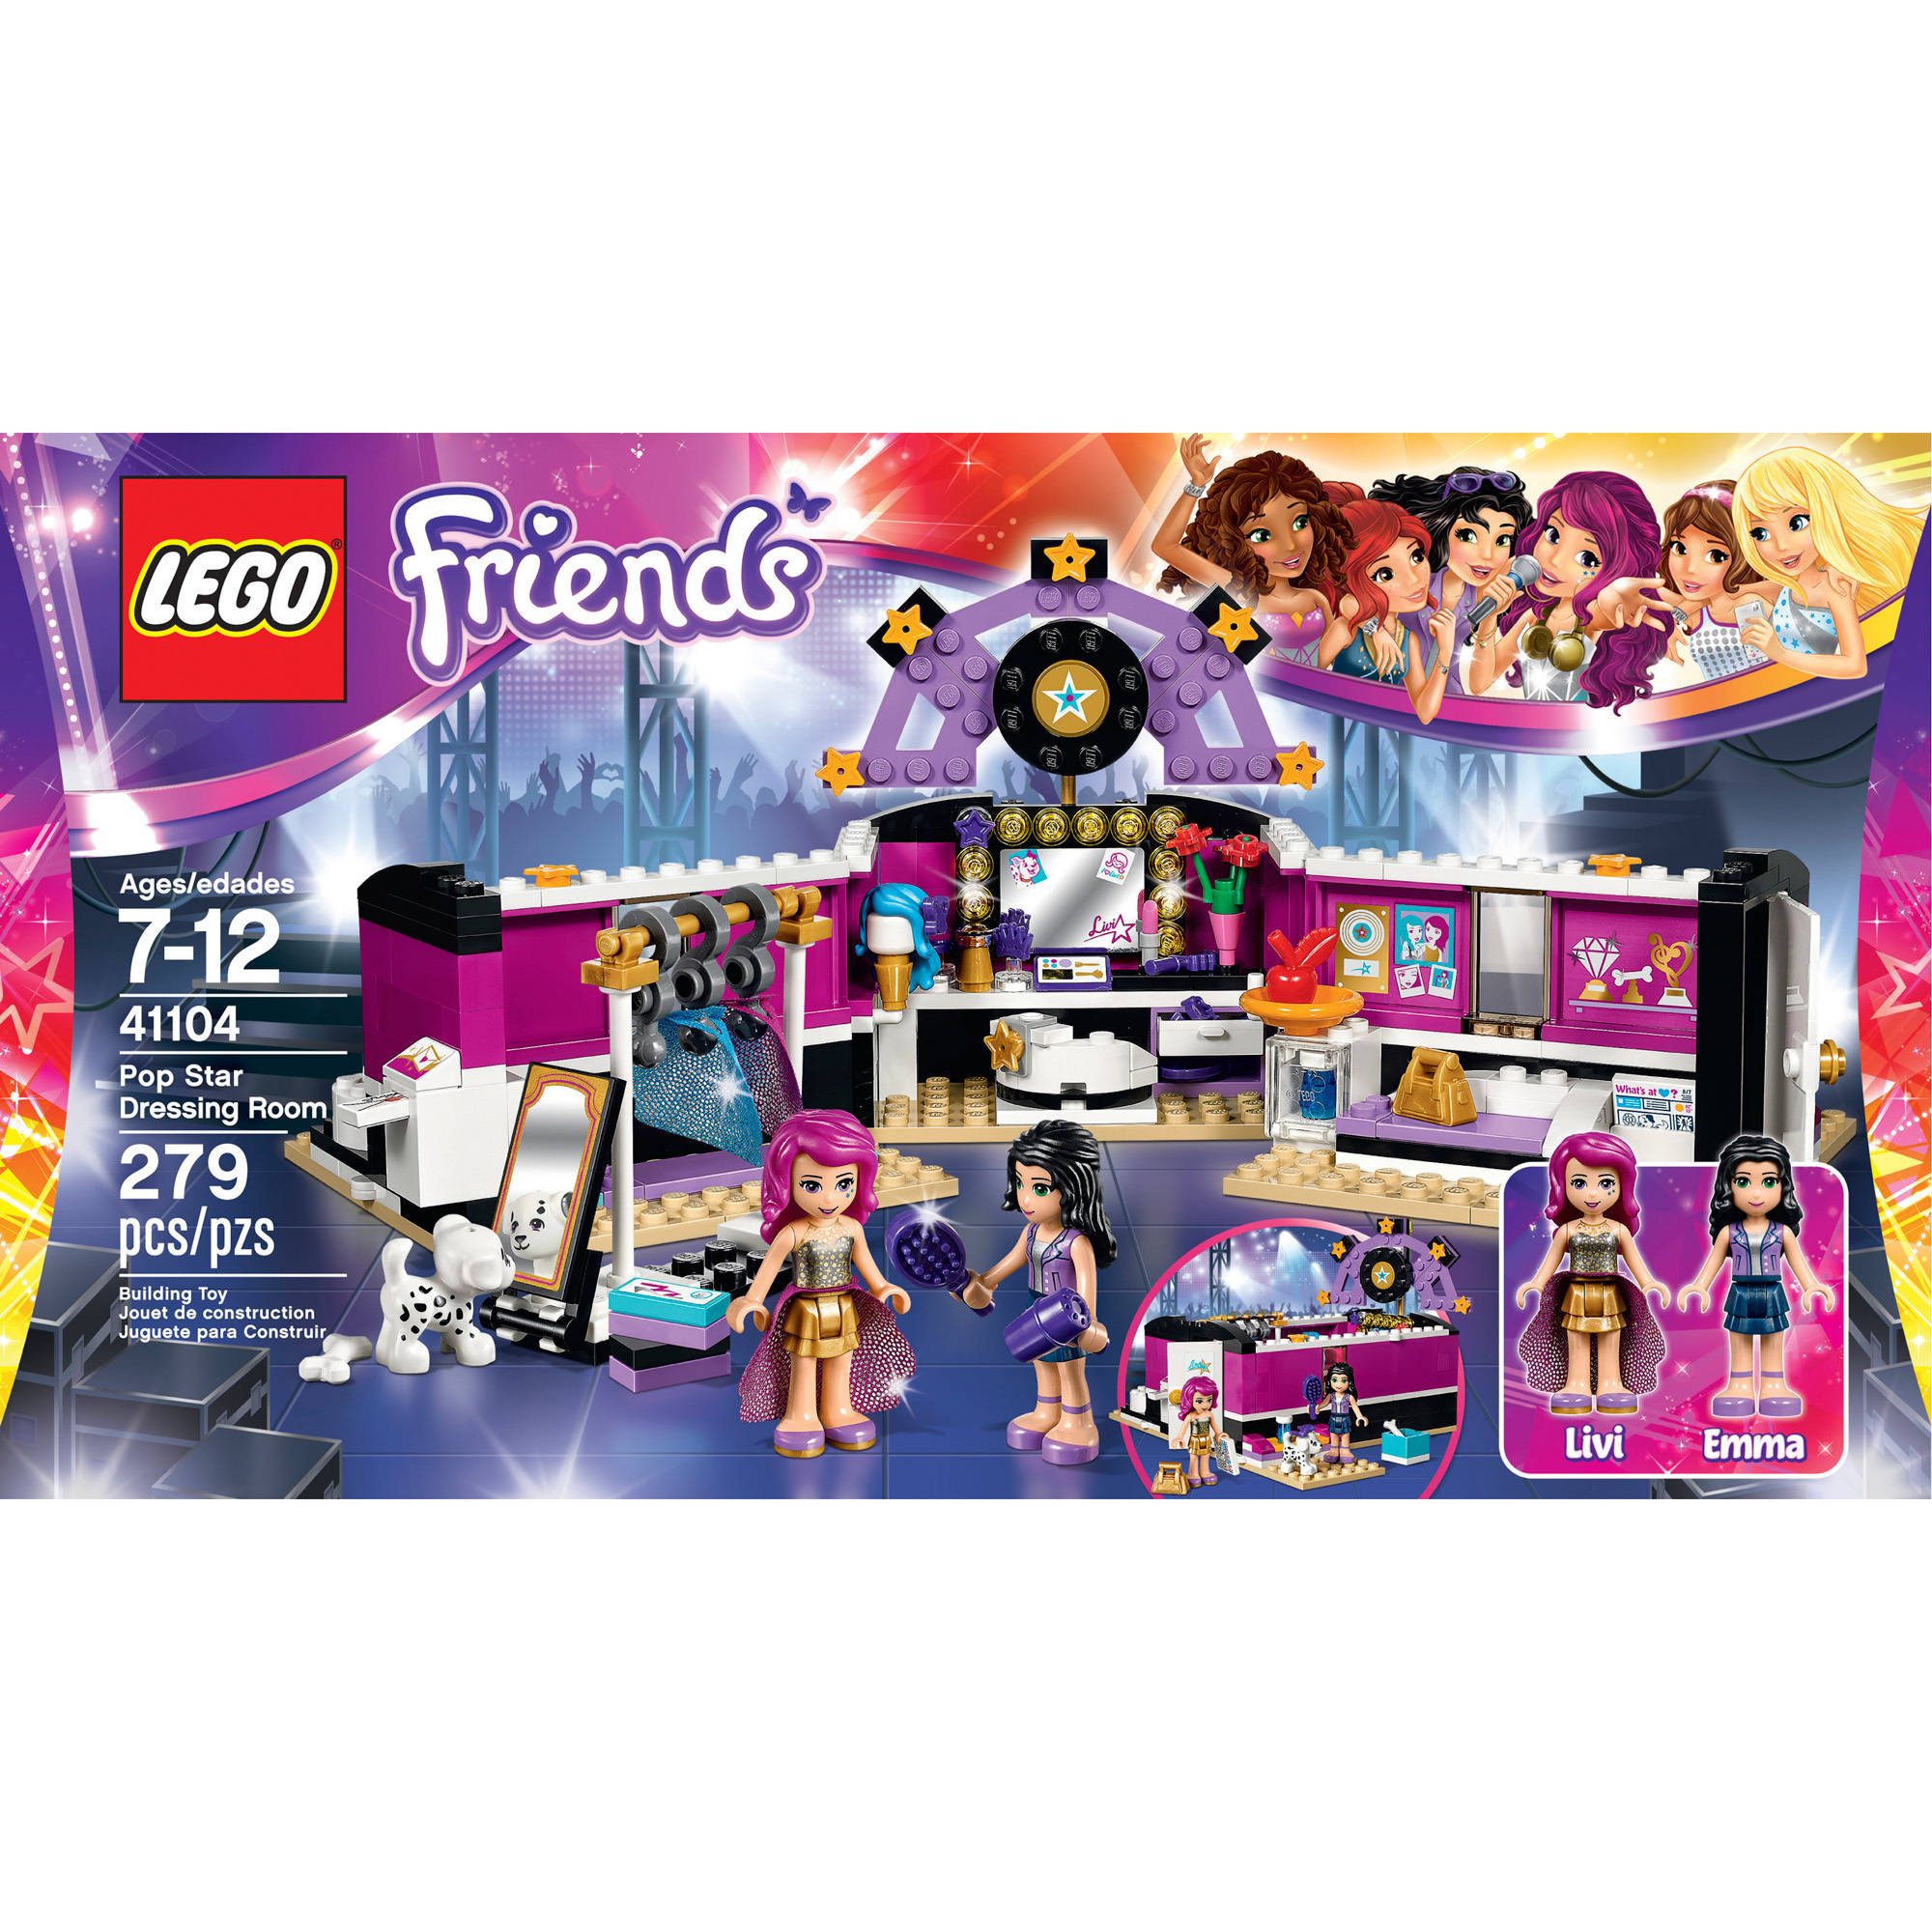 LEGO Friends 41104 Pop Star Dressing Room Building Kit - image 2 of 7